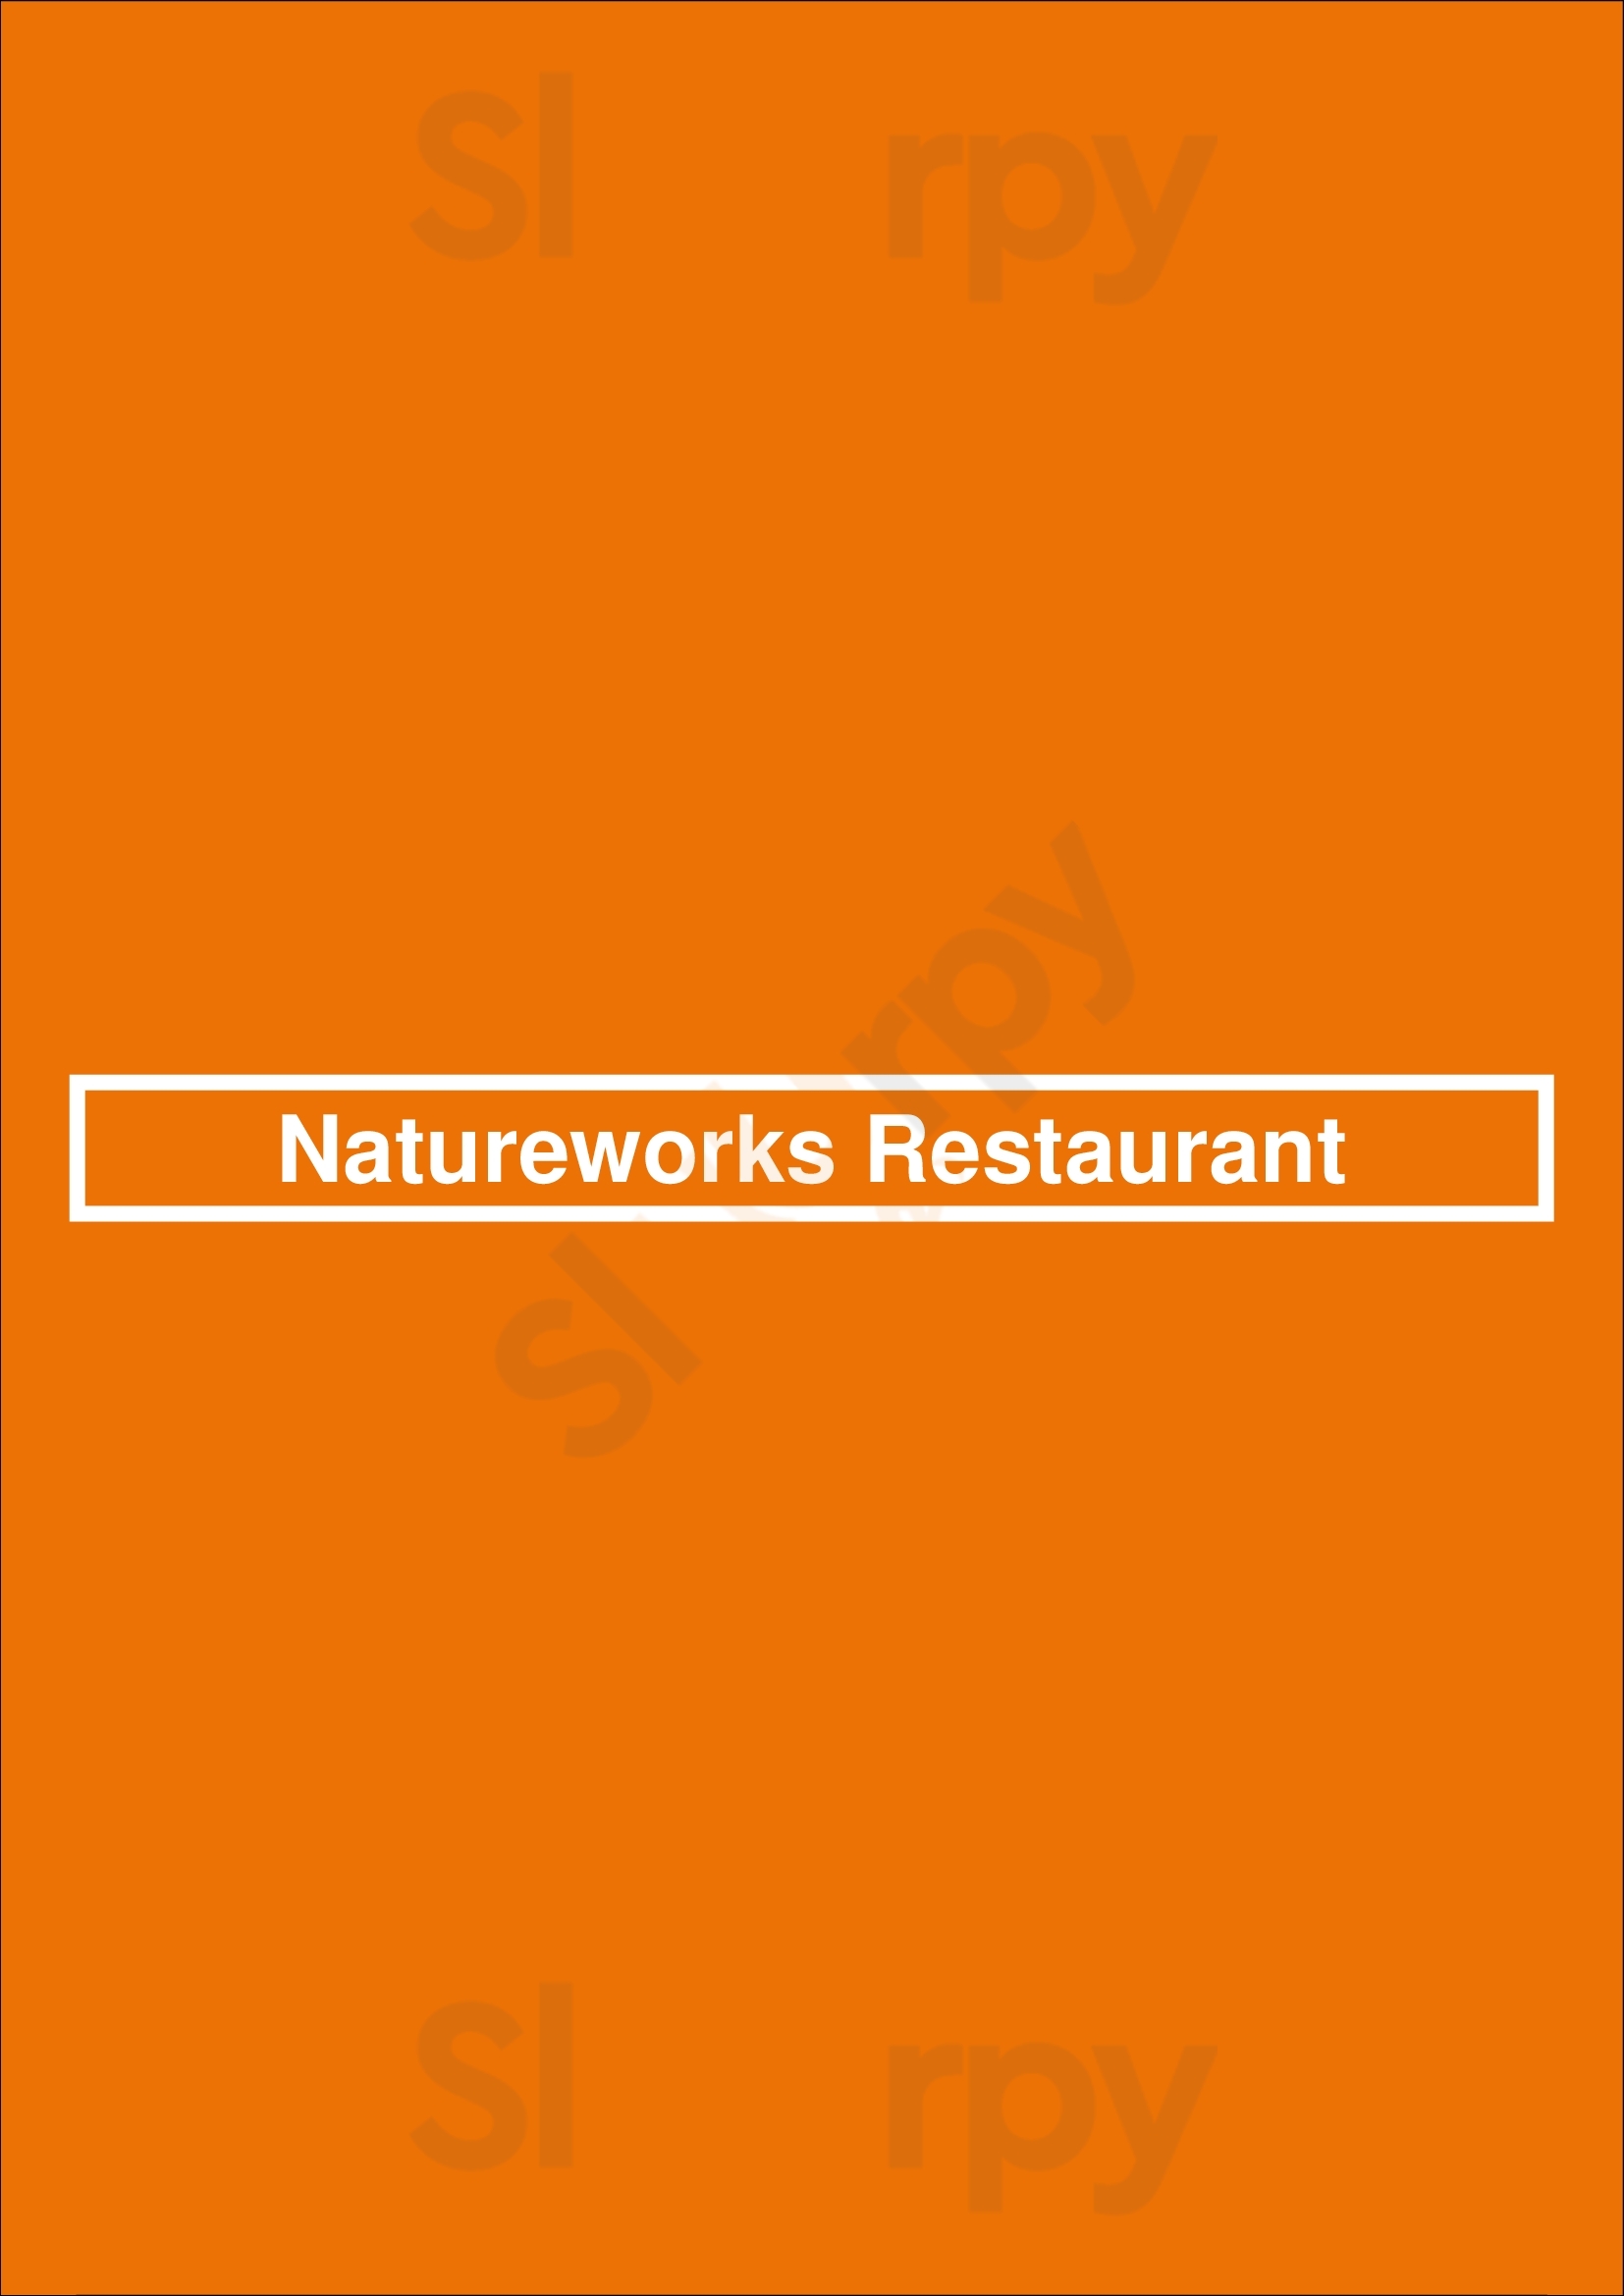 Natureworks Restaurant New York City Menu - 1